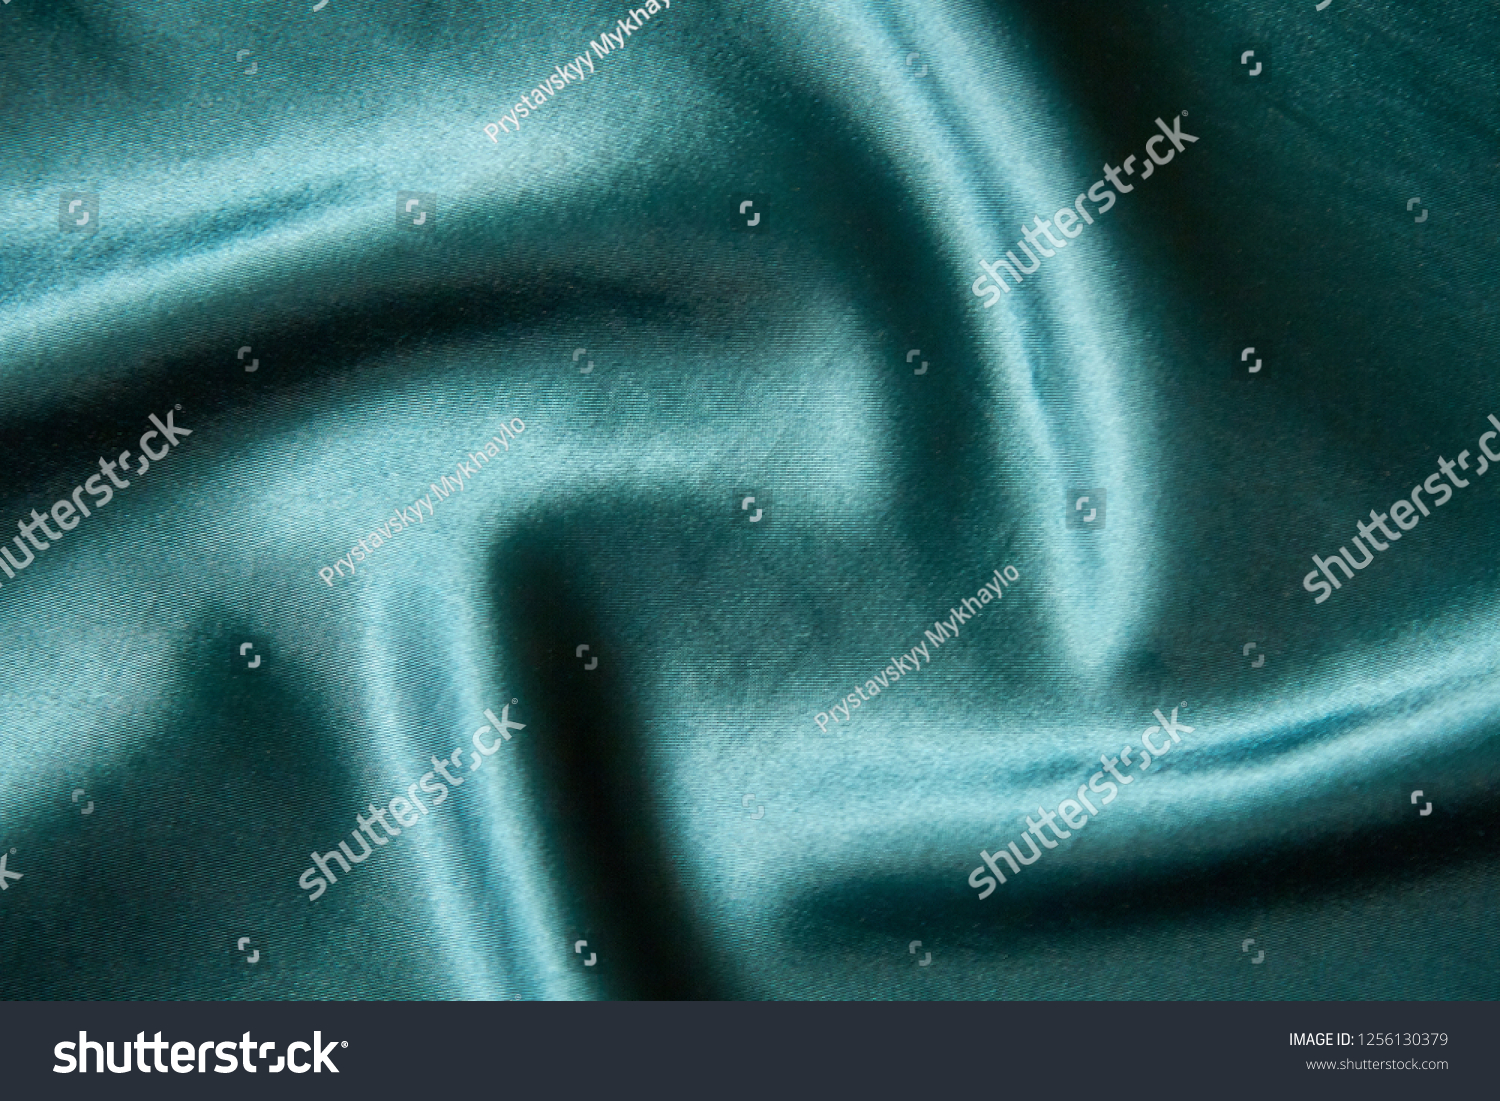 
Dark background. Folds on dark fabric of dark green color. #1256130379